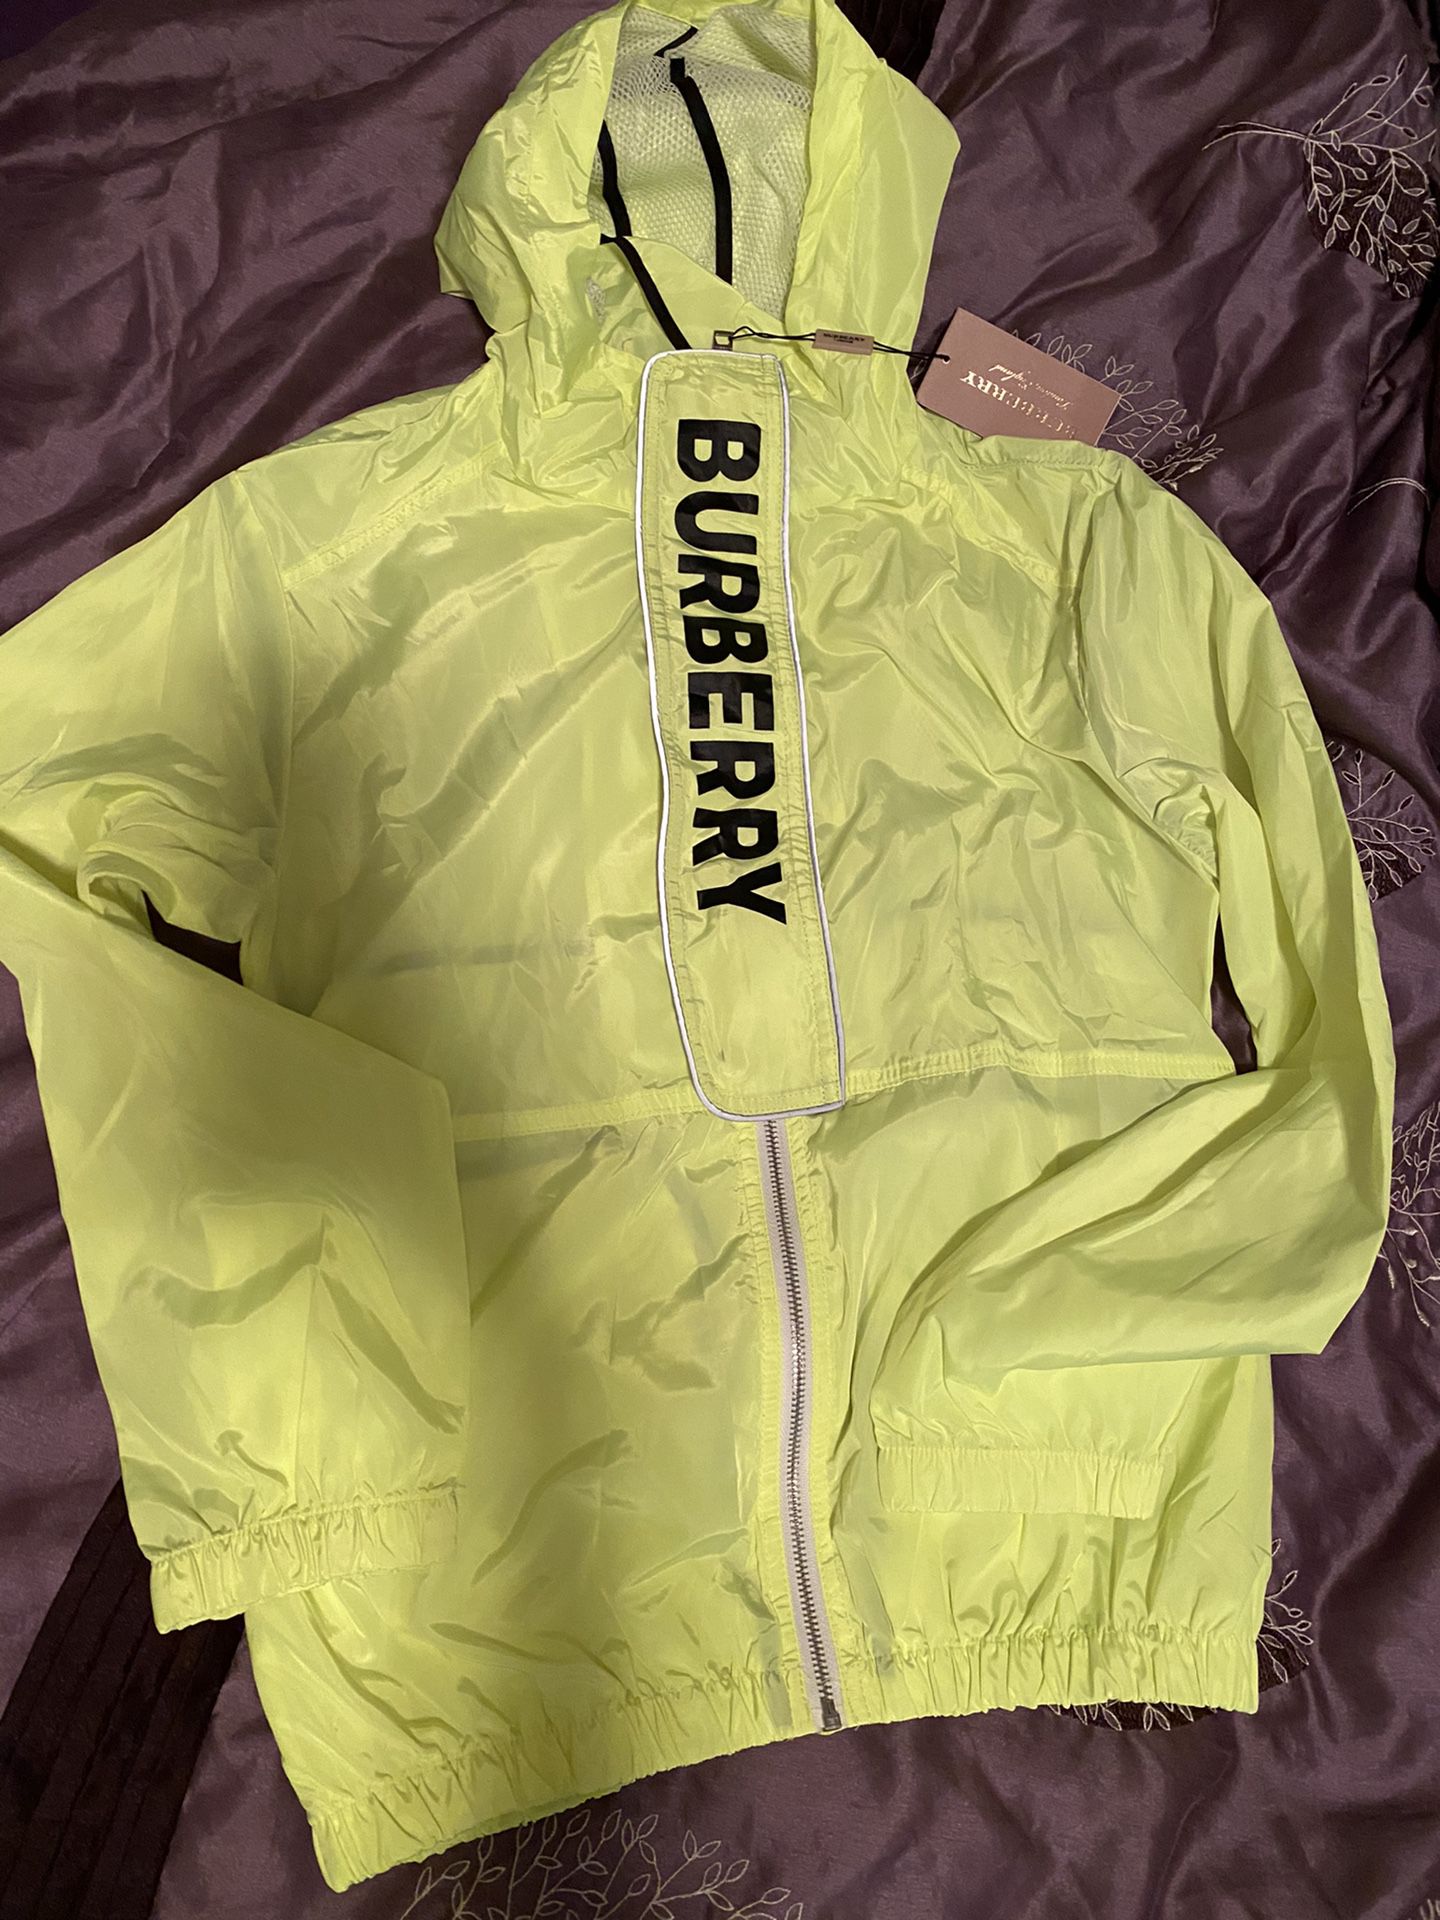 Burberry jacket/ windbreaker size M/L